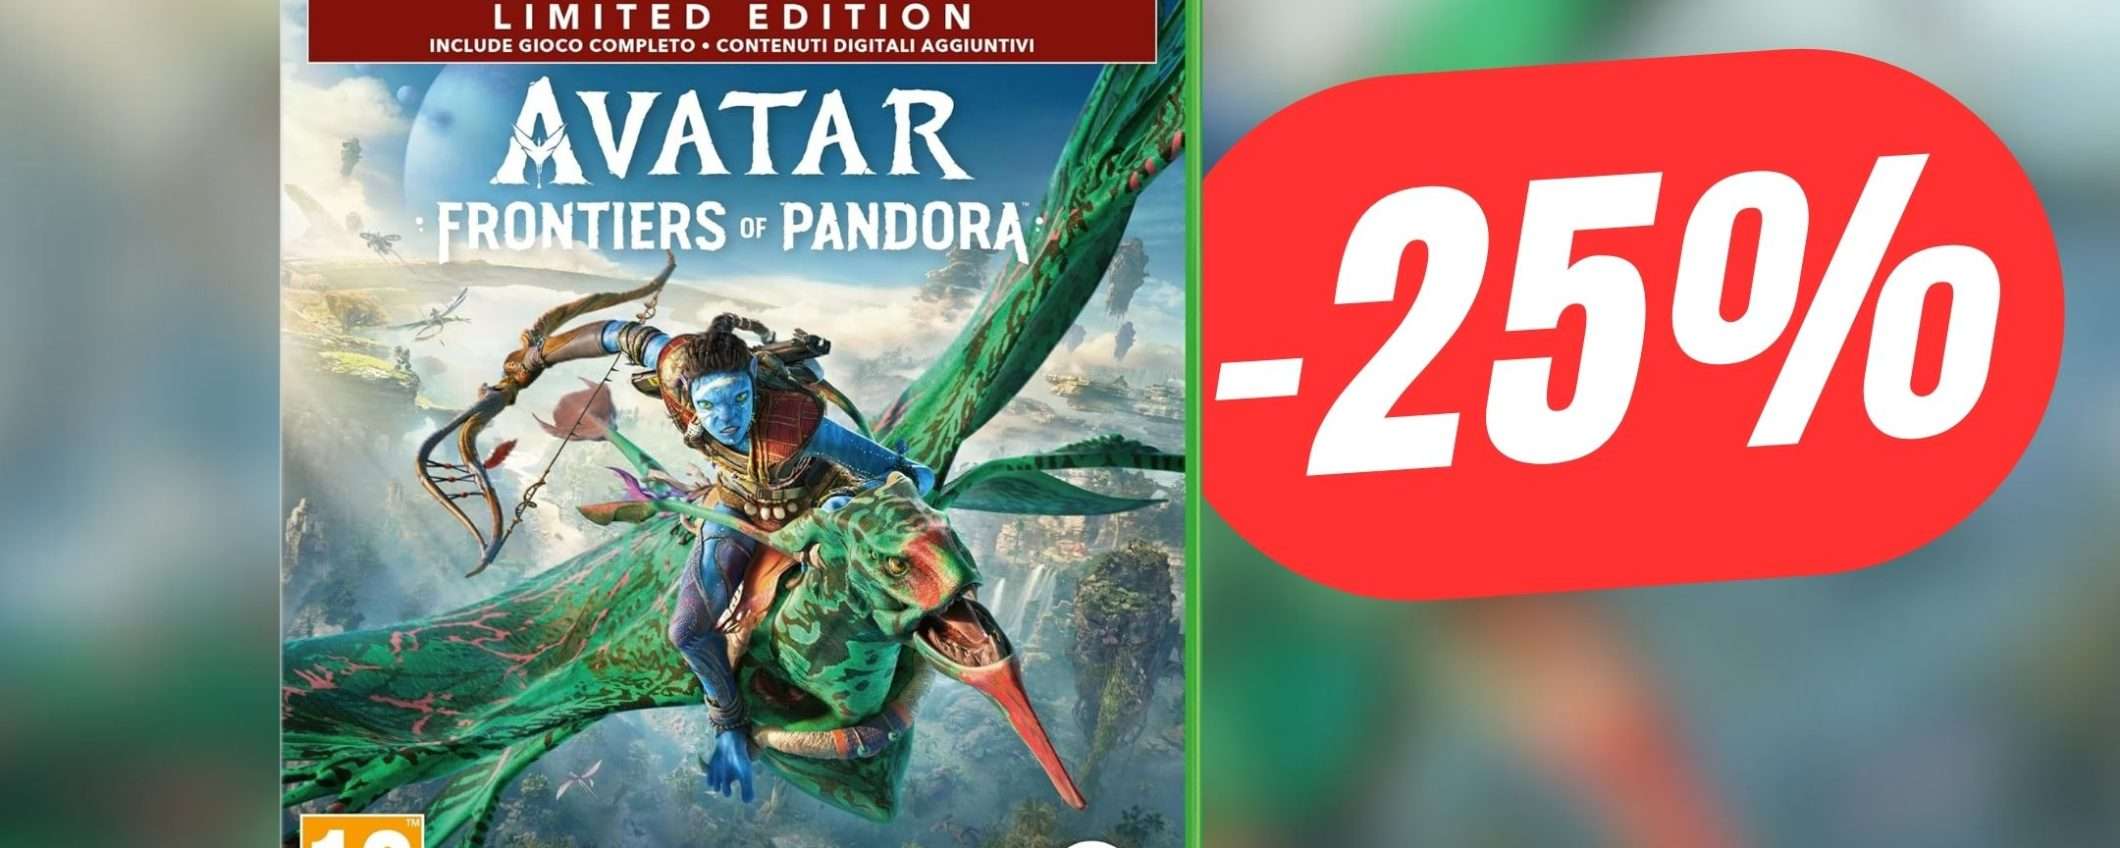 Il nuovissimo Avatar: Frontiers of Pandora LIMITED EDITION è in sconto!